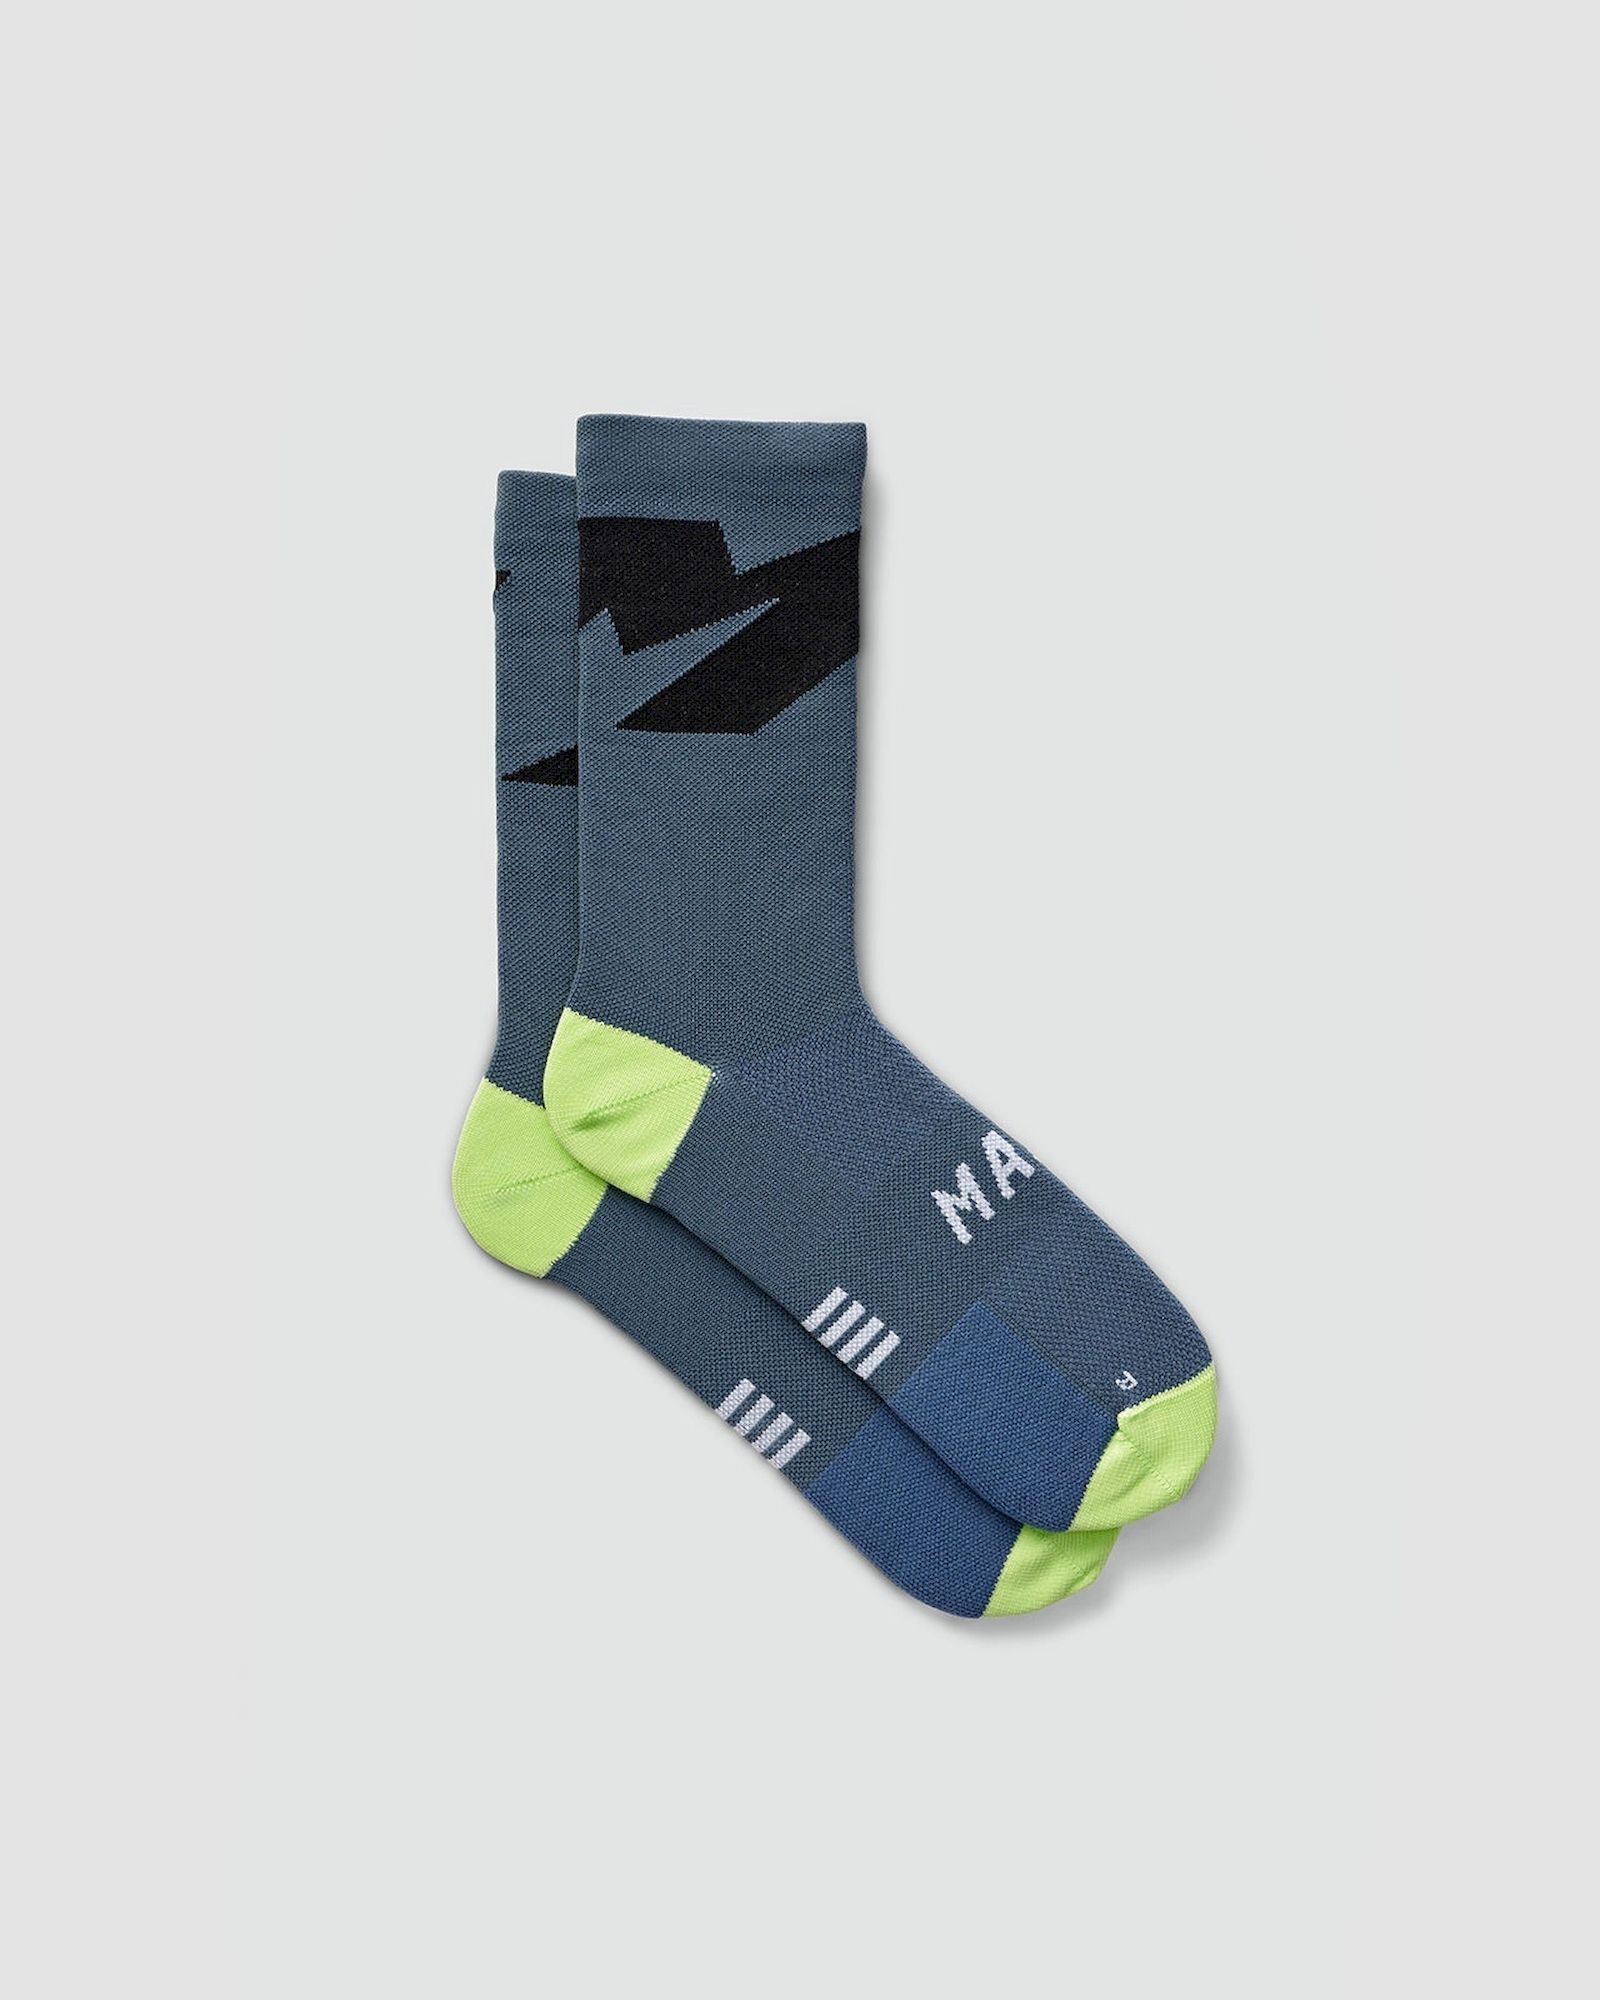 Maap Evolve Sock - Calcetines ciclismo | Hardloop